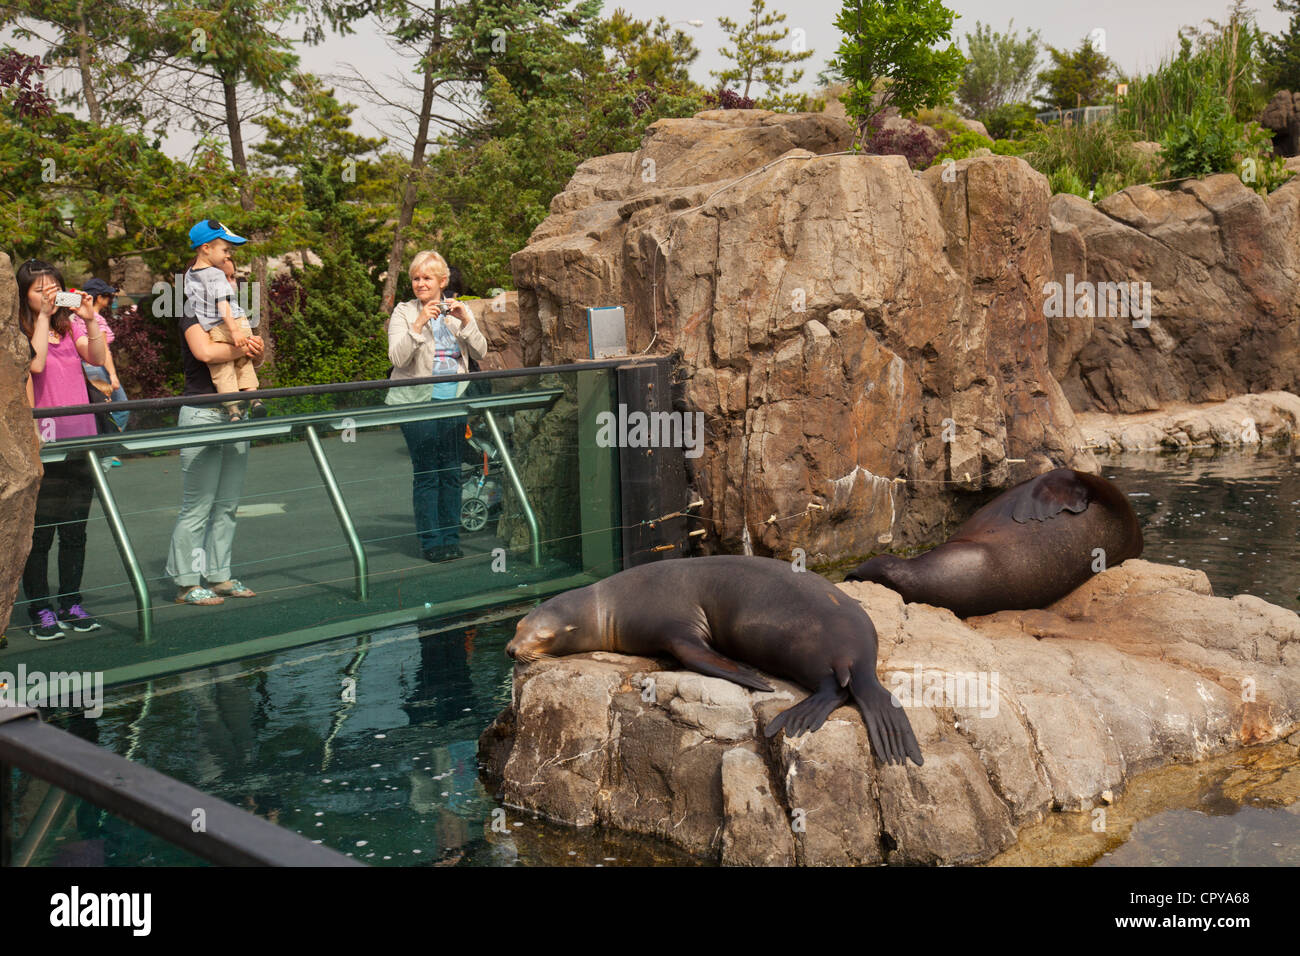 New York Aquarium in Brooklyn New York Stock Photo - Alamy